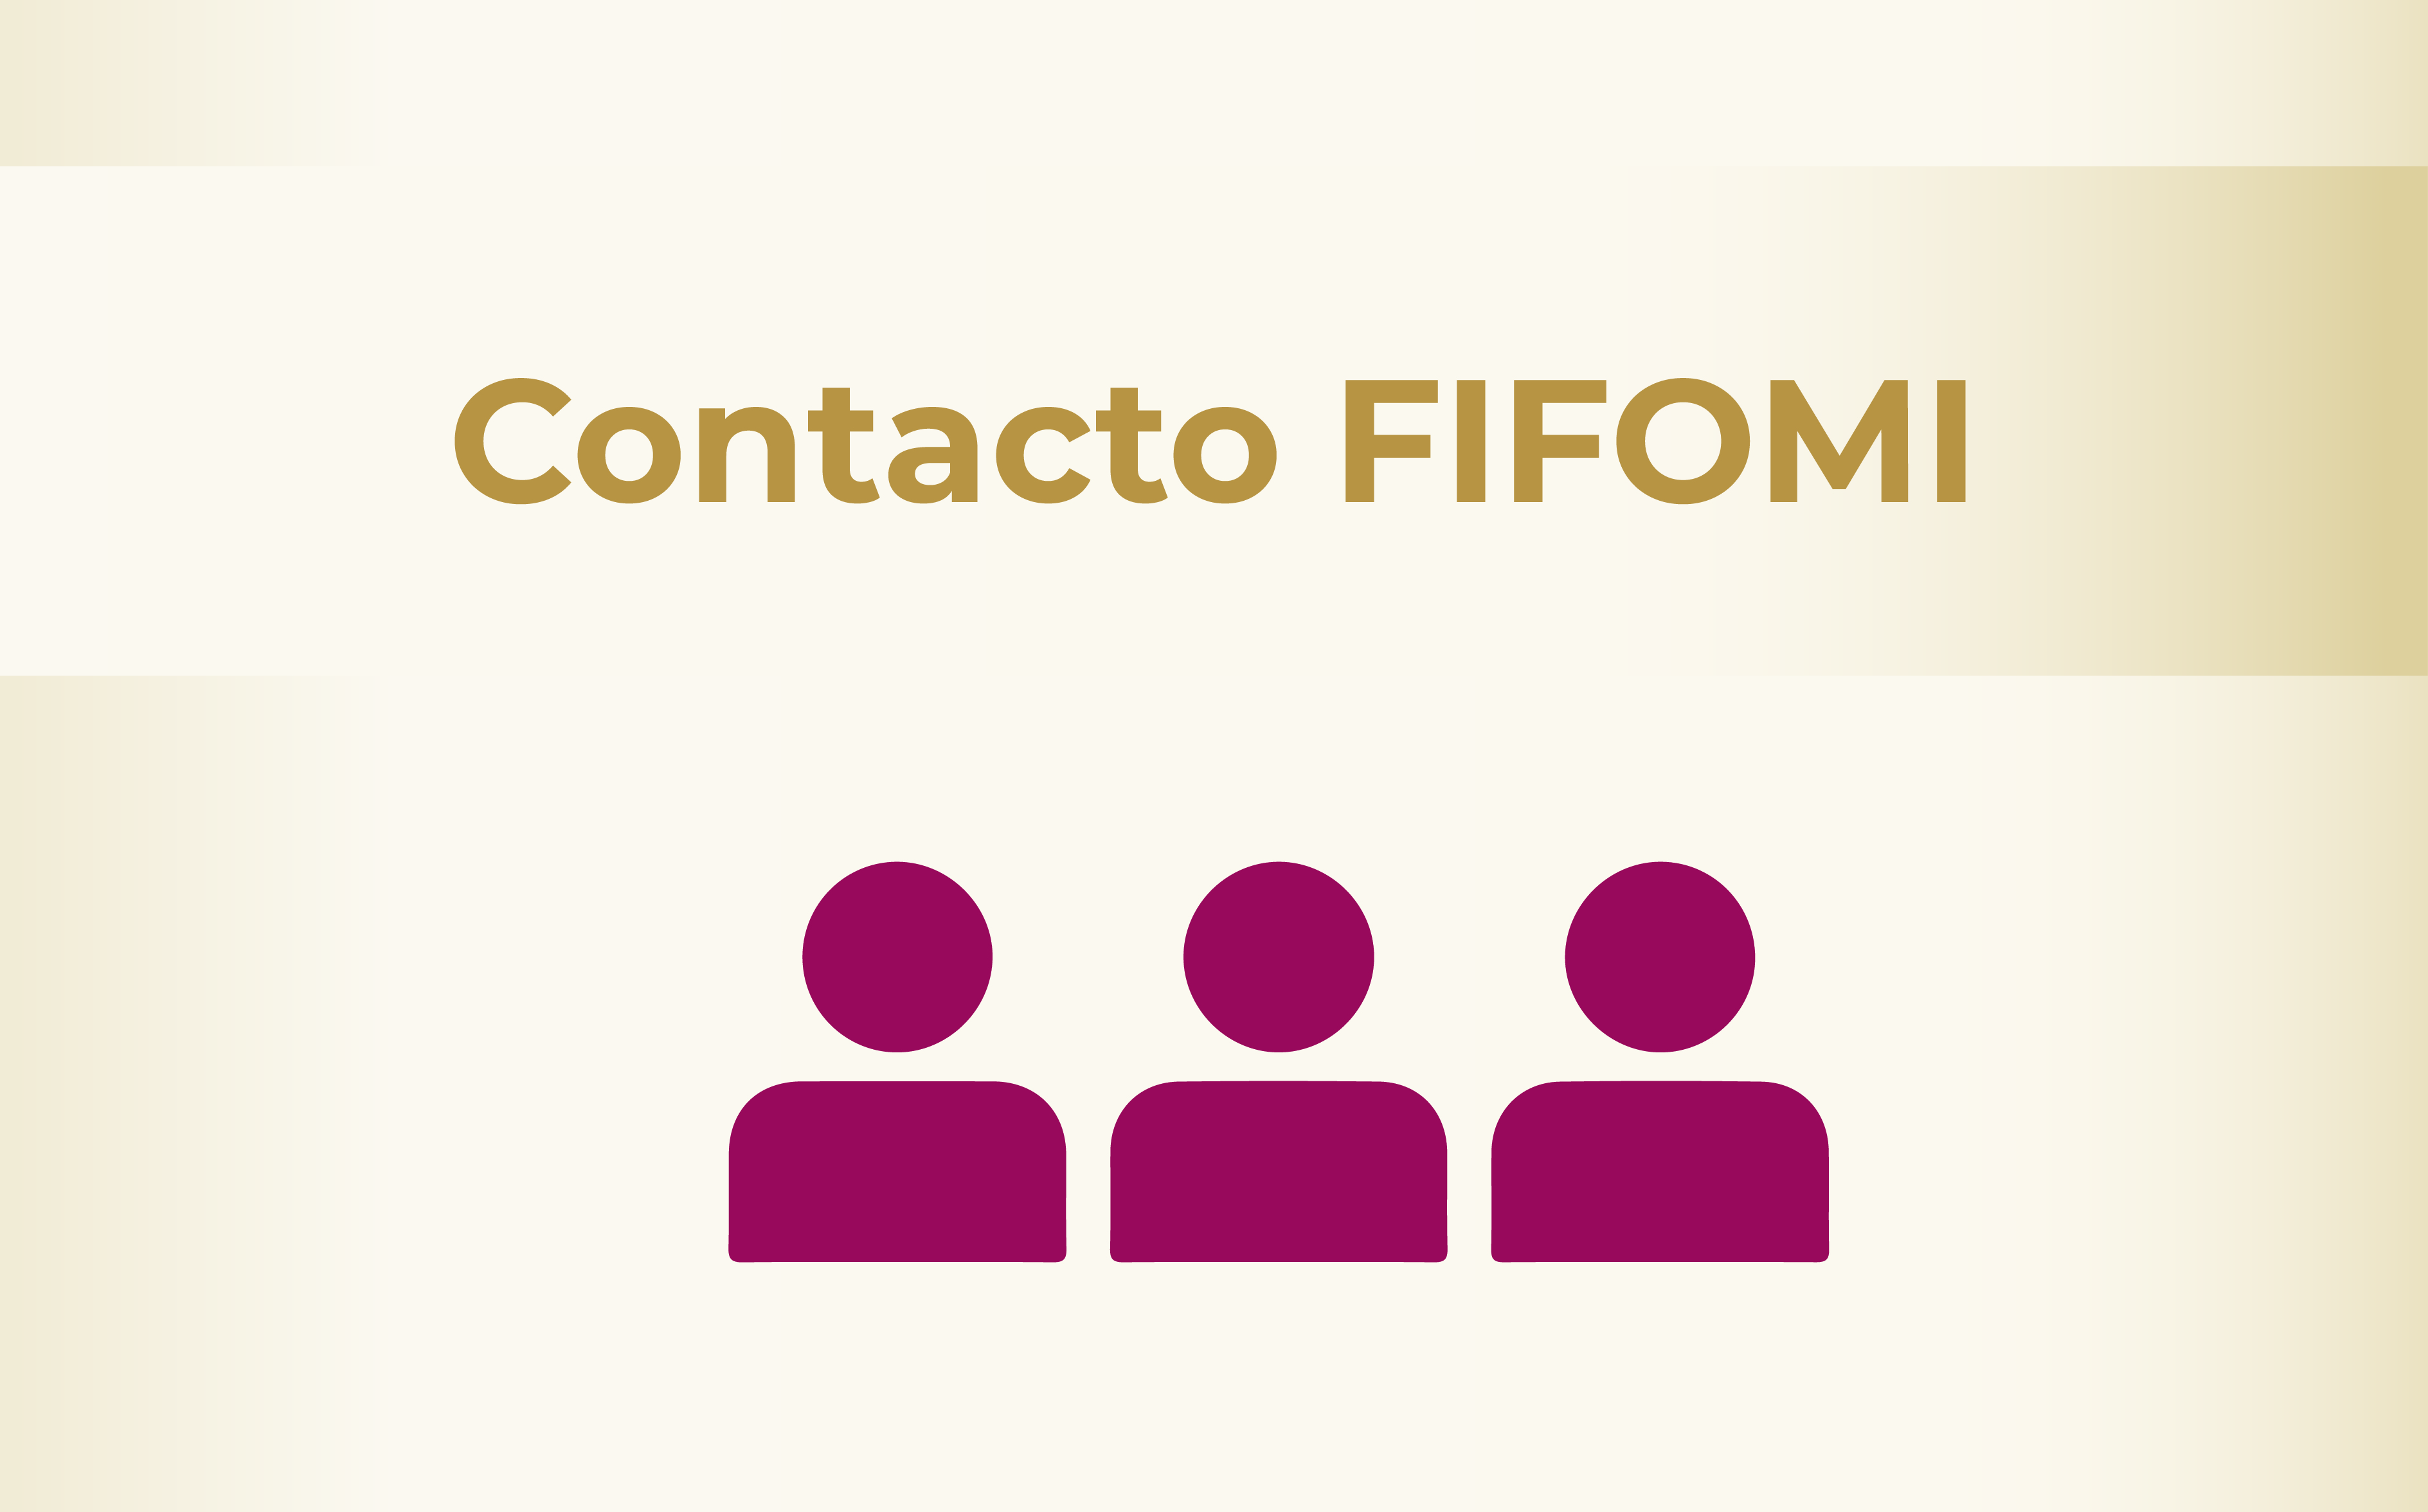 Contacto FIFOMI